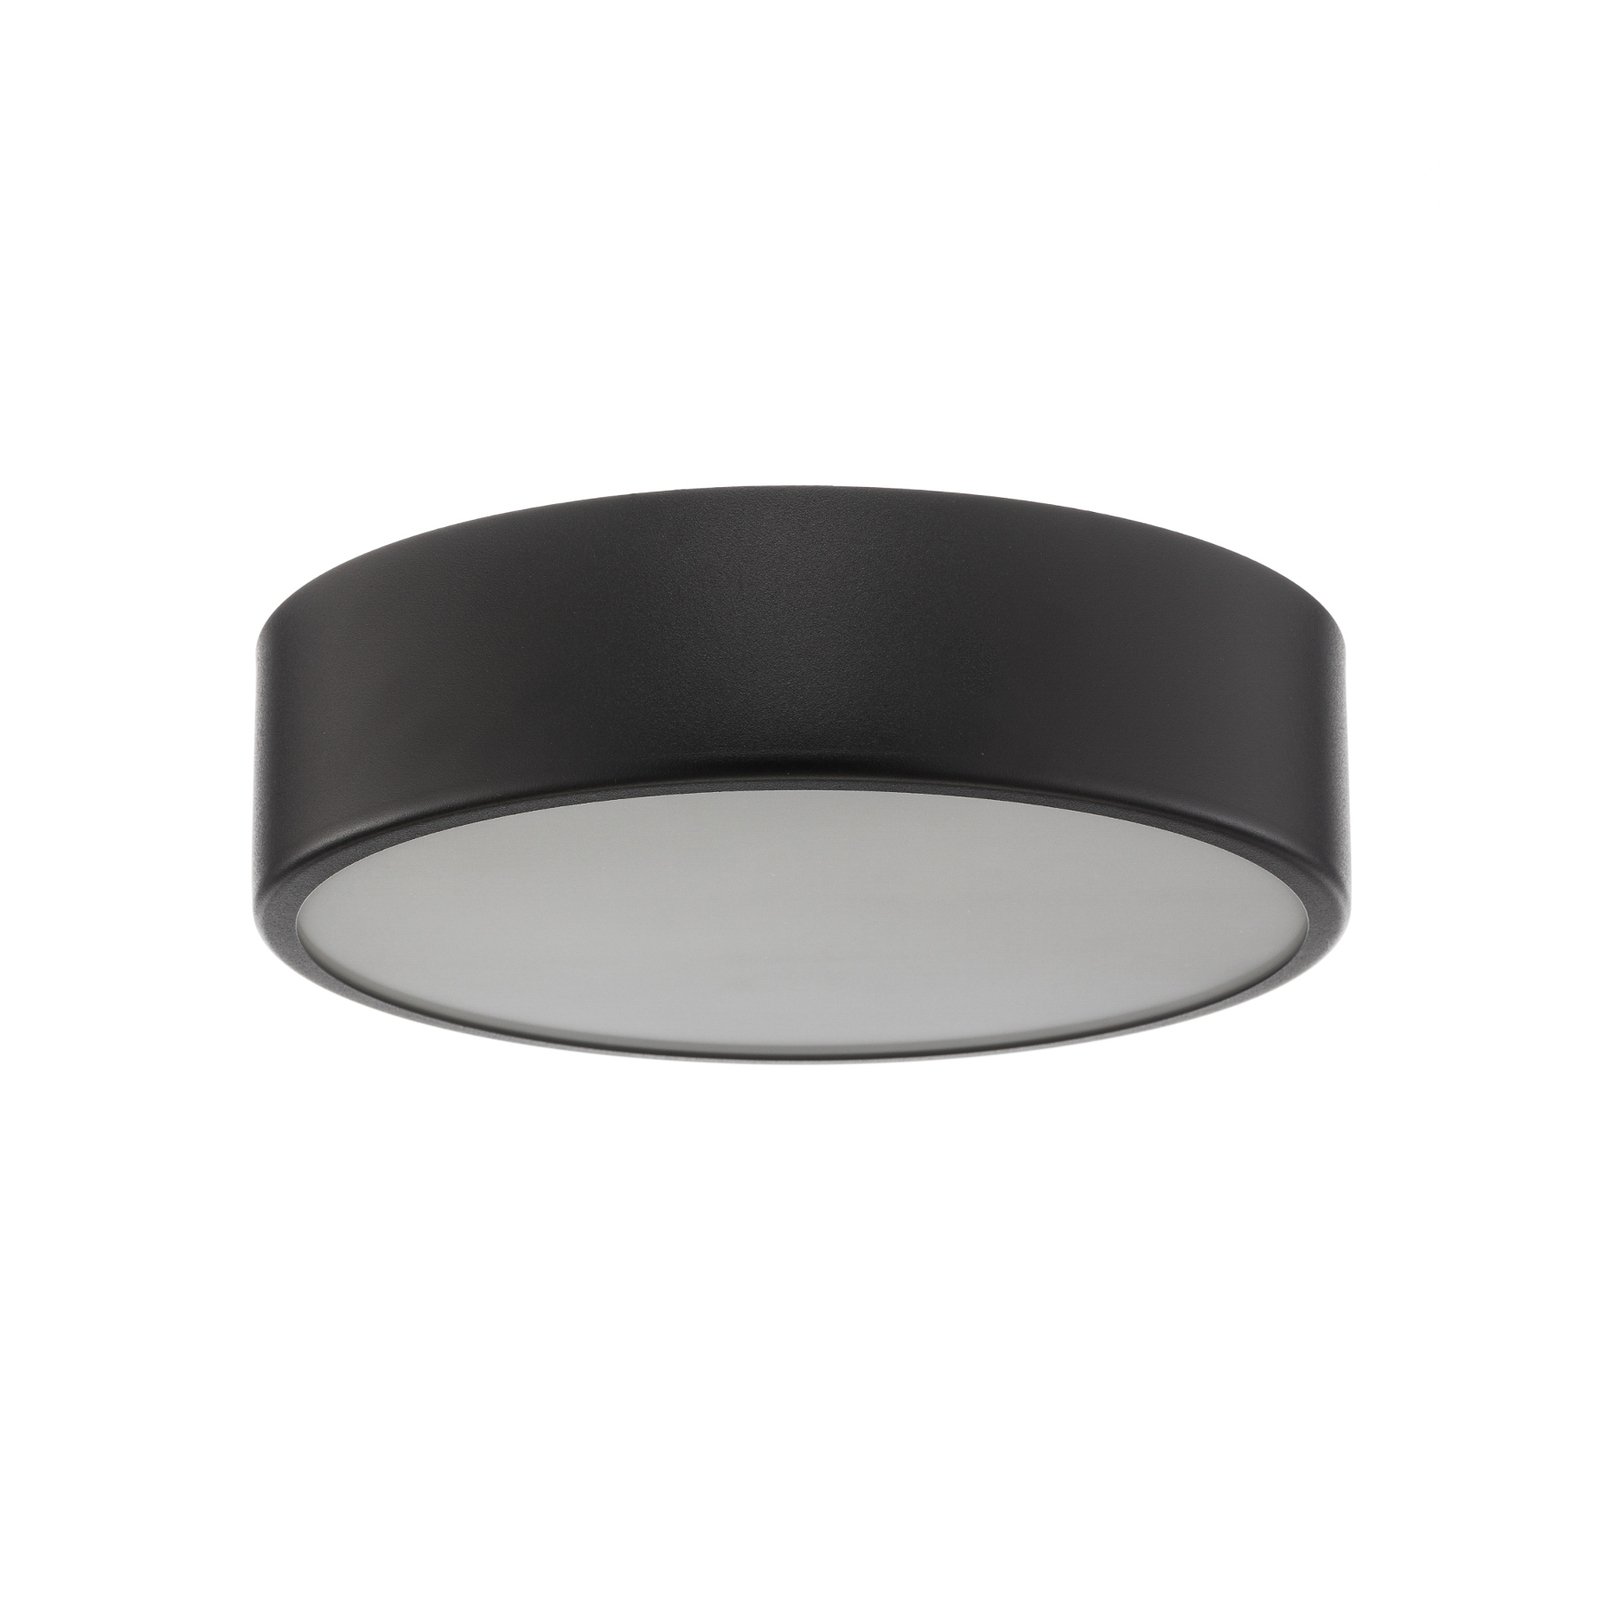 Cleo ceiling light, Ø 30 cm, black